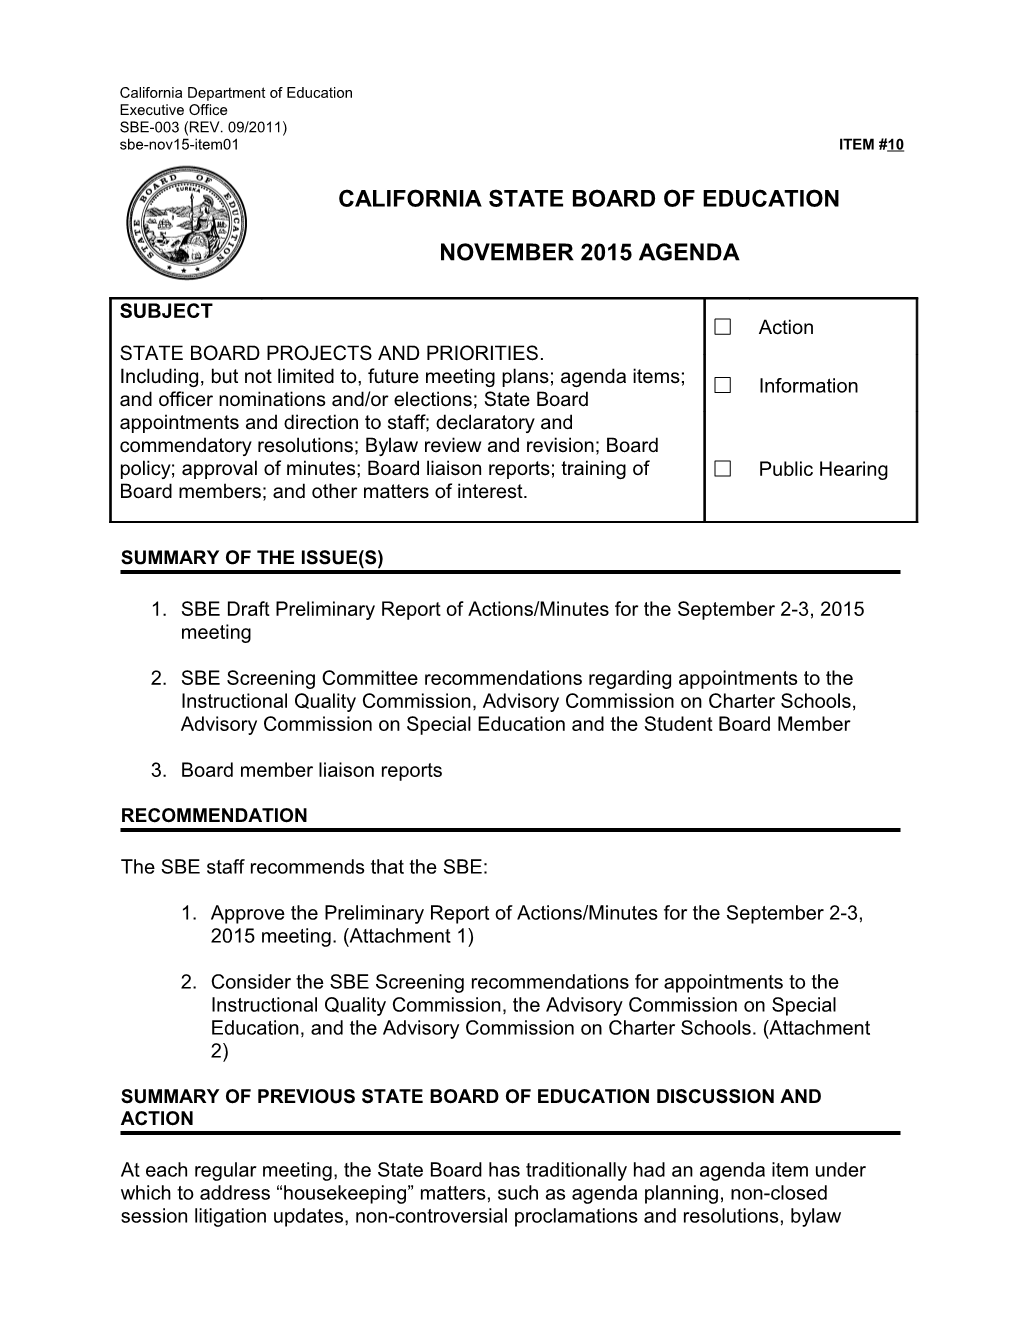 November 2015 Agenda Item 10 - Meeting Agendas (CA State Board of Education)